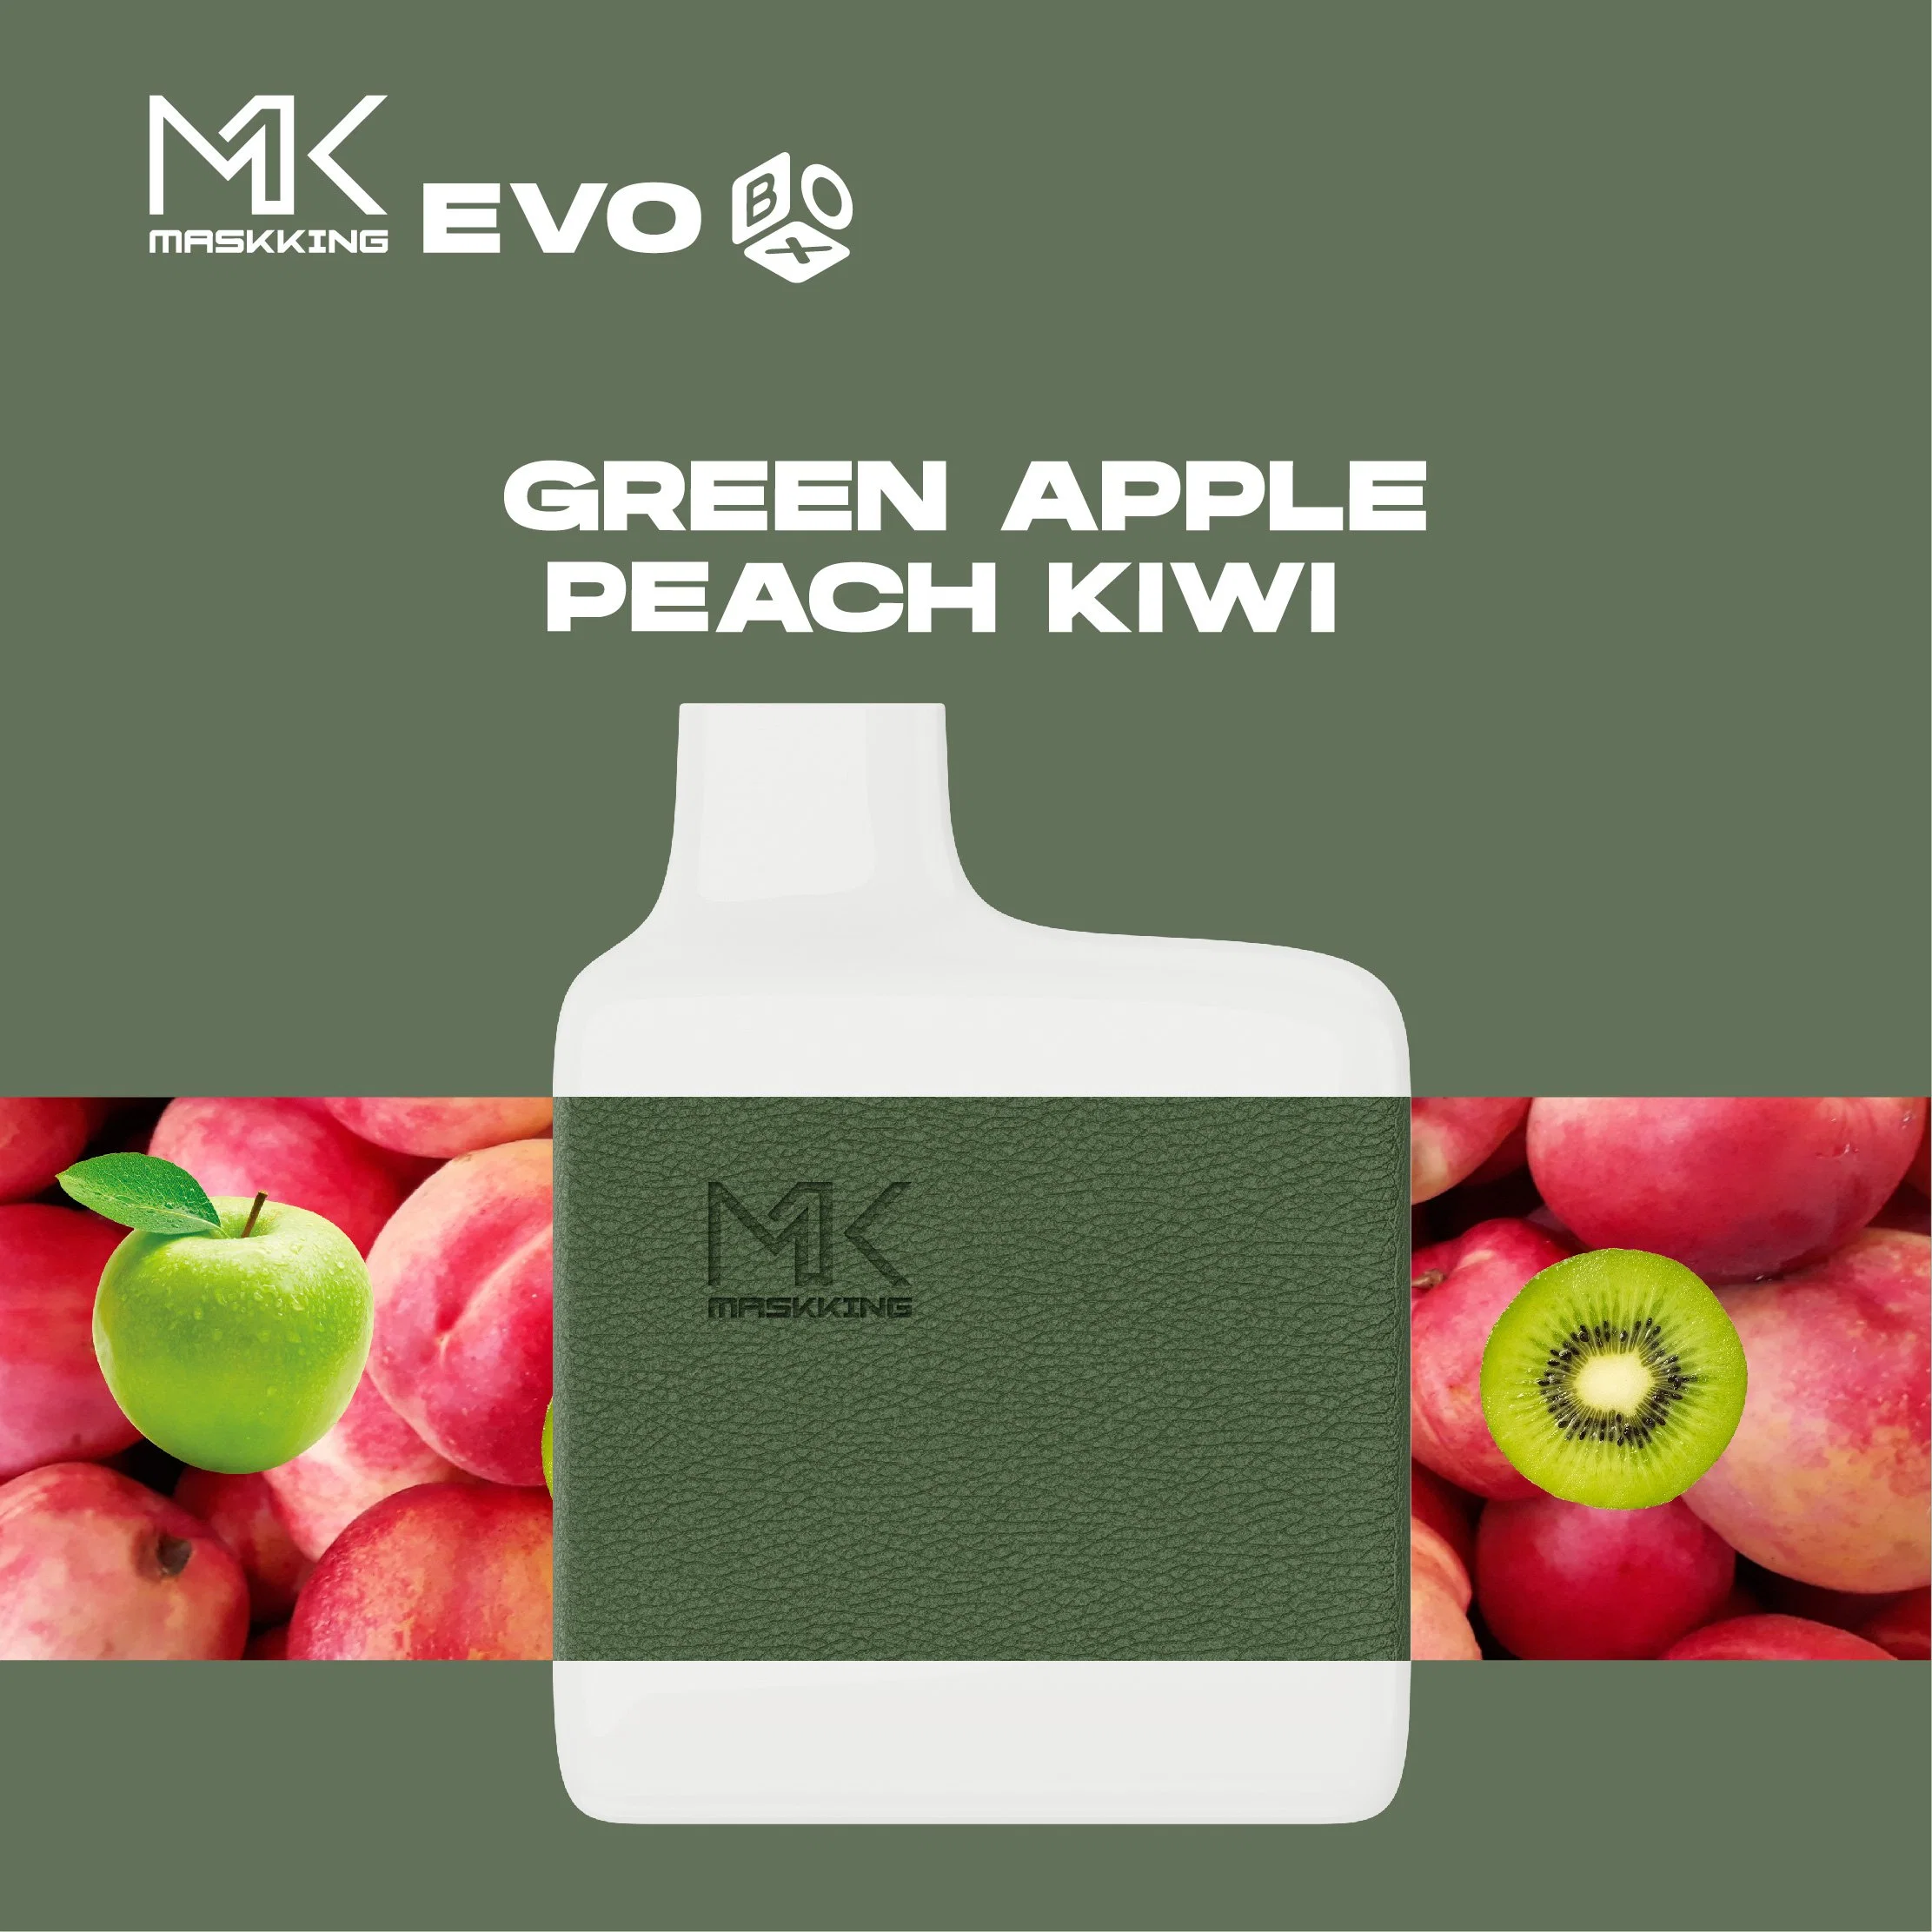 Maskking Evo Box 5000+Puffs 19 Flavors 12ml Oil 550mAh Rechargeable Vape